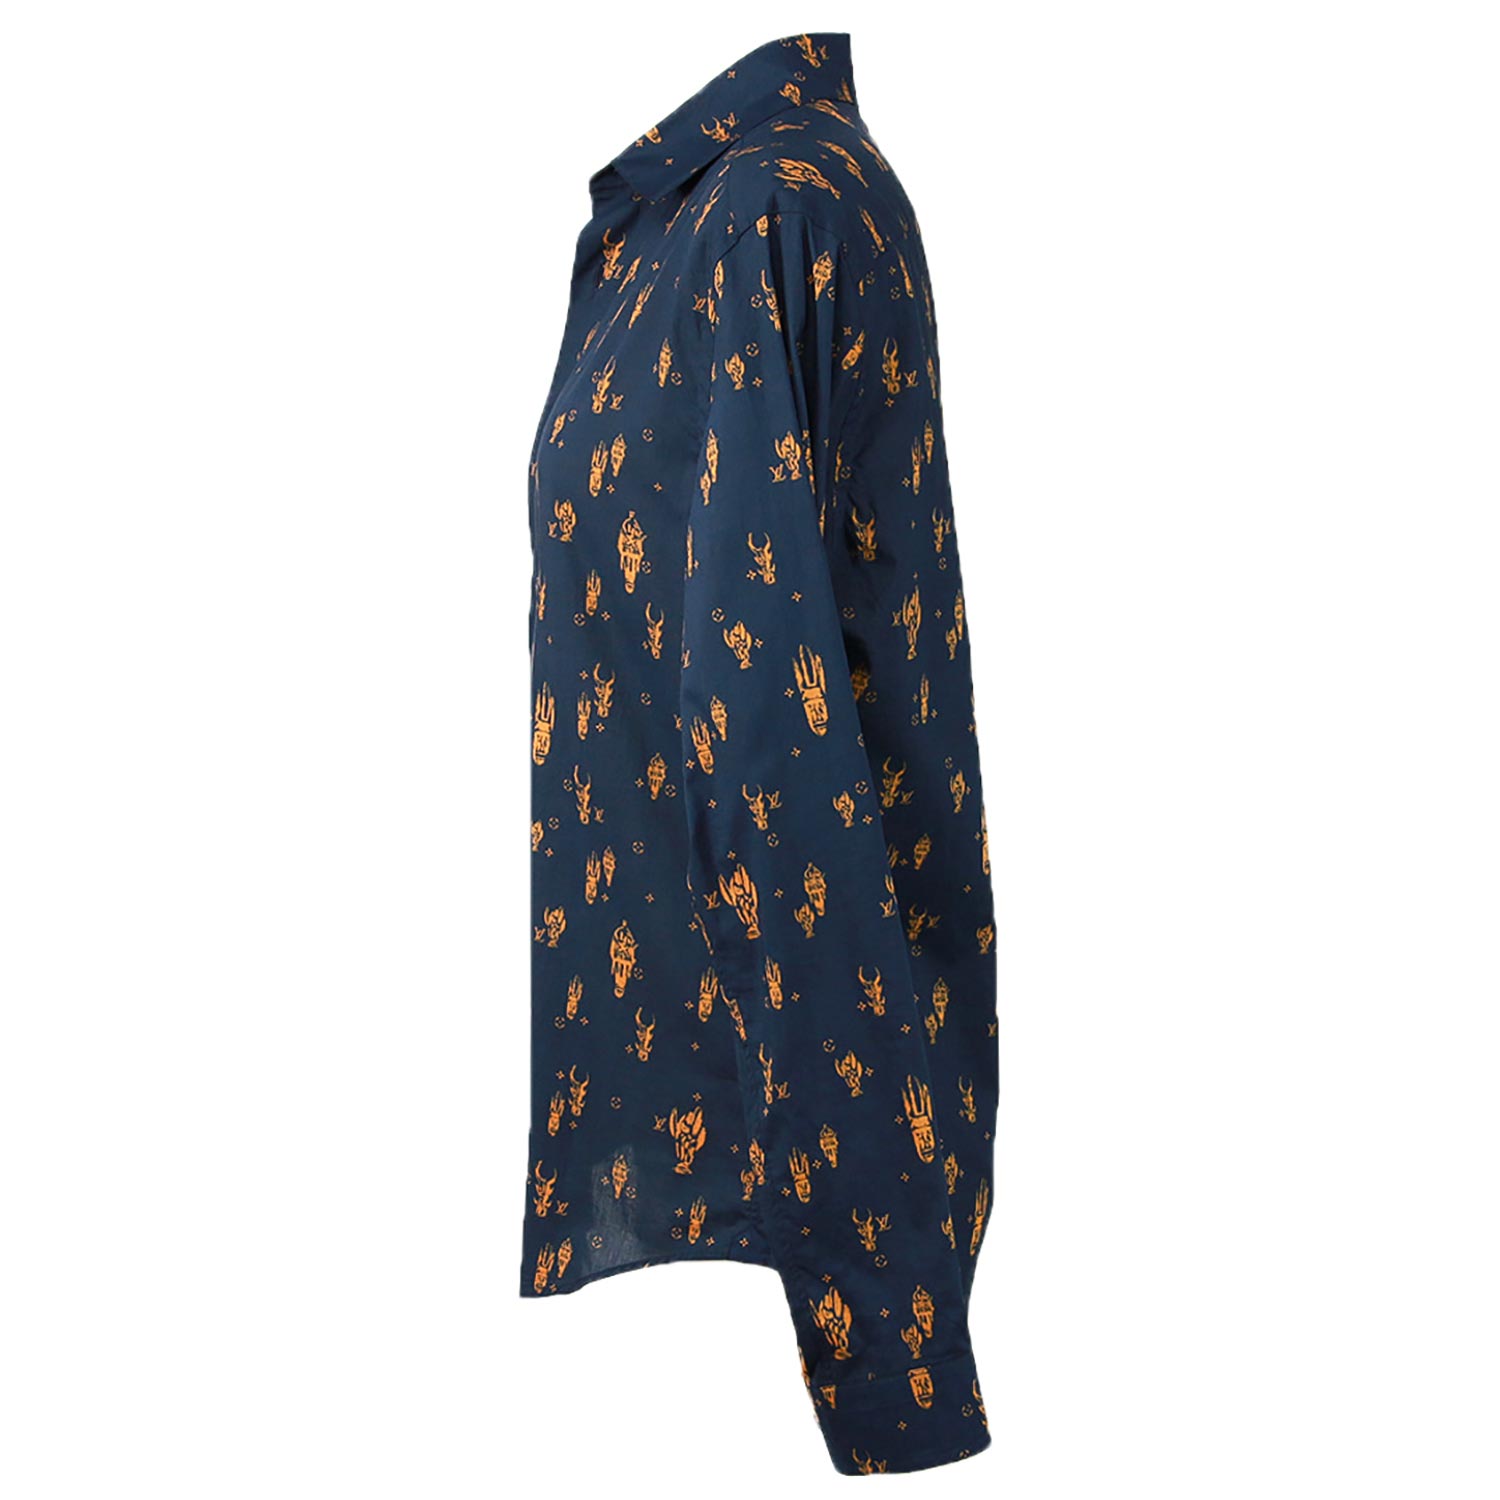 Louis Vuitton Men Casual Long Sleeve Button-Down Printed Shirt S US / LV S | eBay